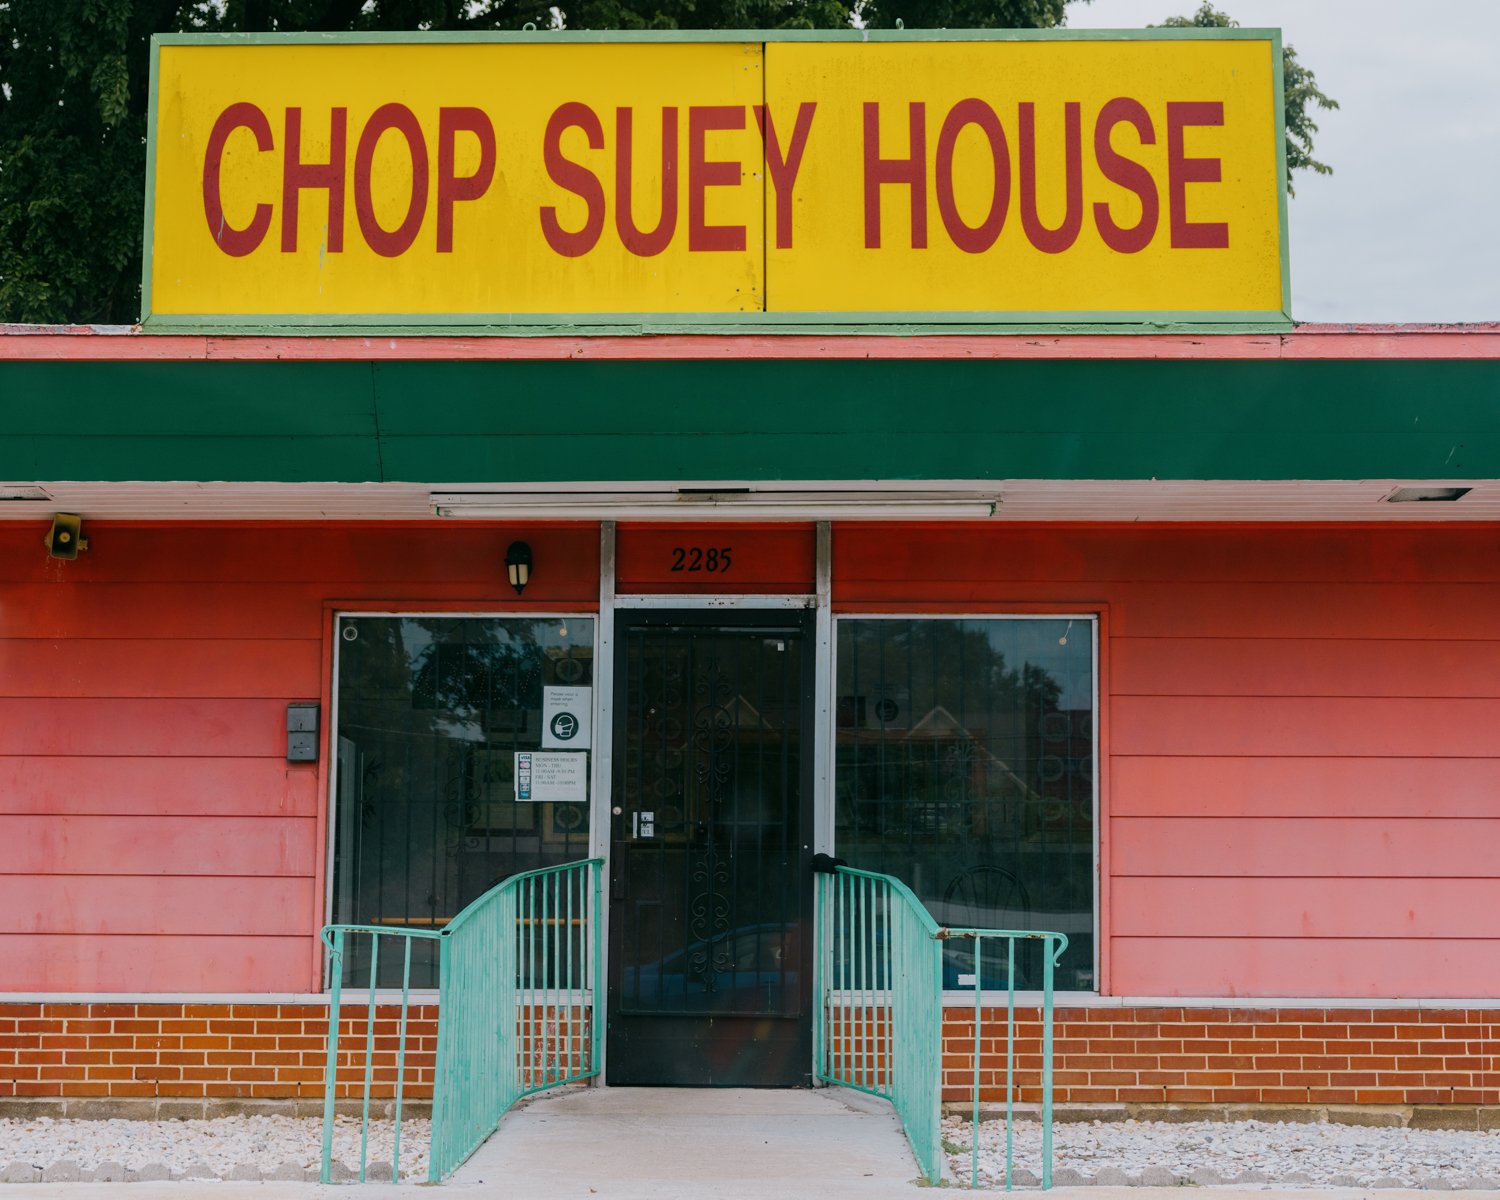 New China (Chop Suey House)